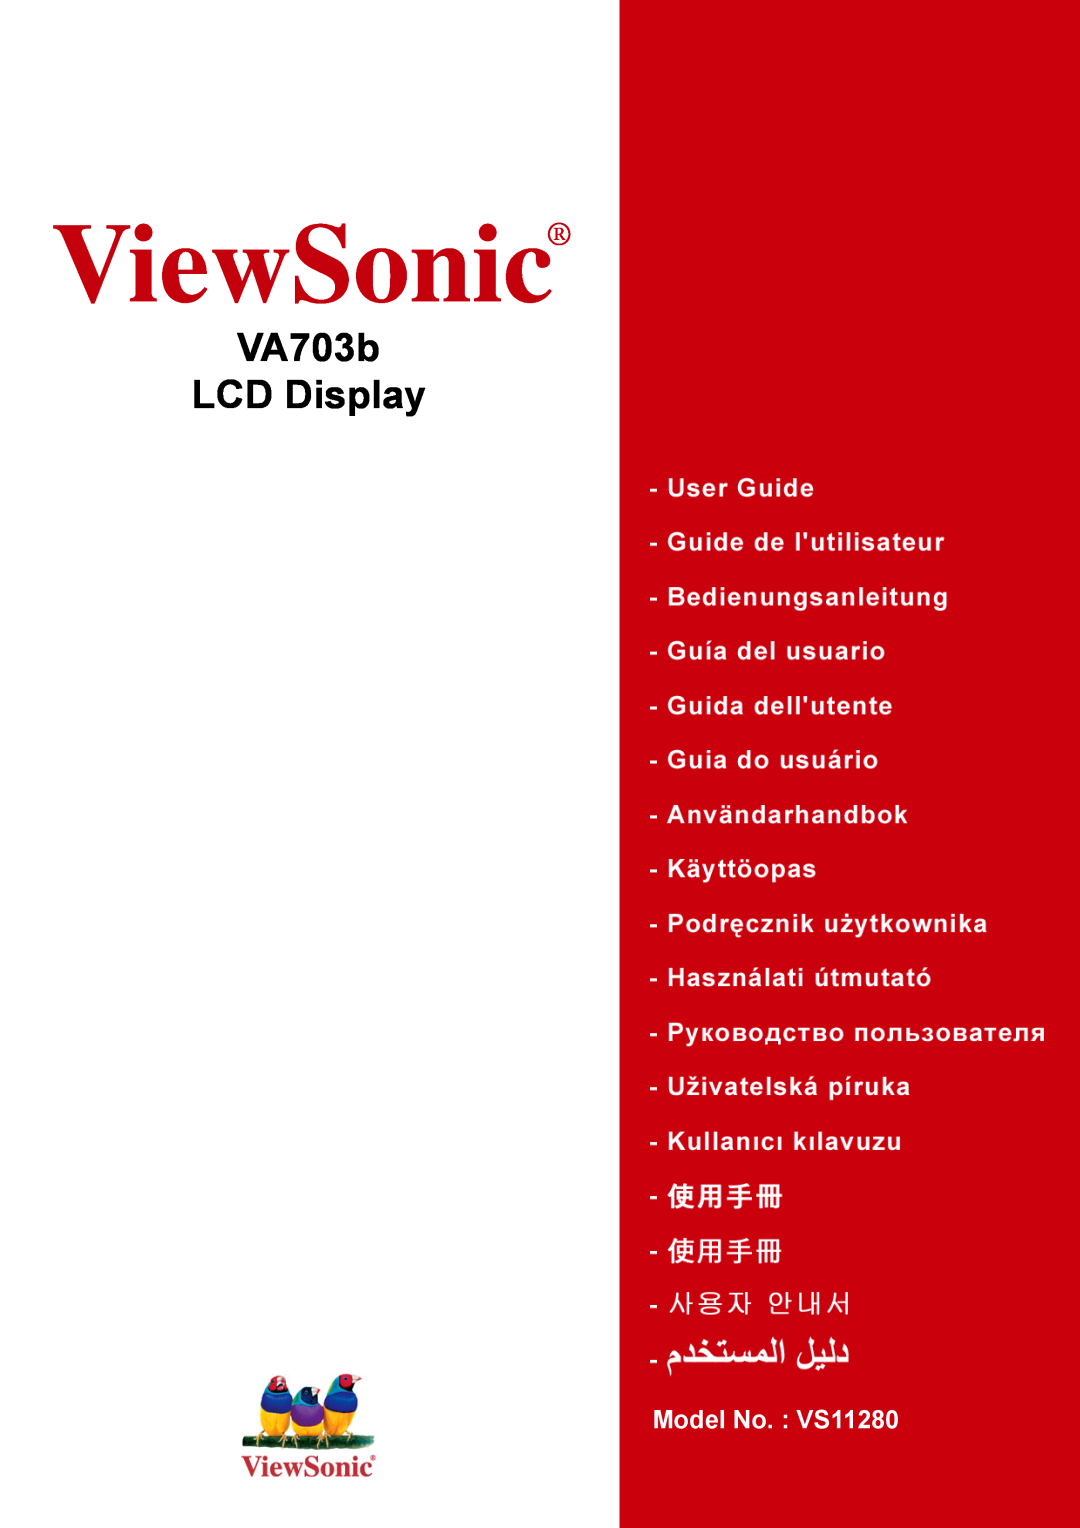 ViewSonic manual ViewSonic, VA703b LCD Display, Model No. VS11280 